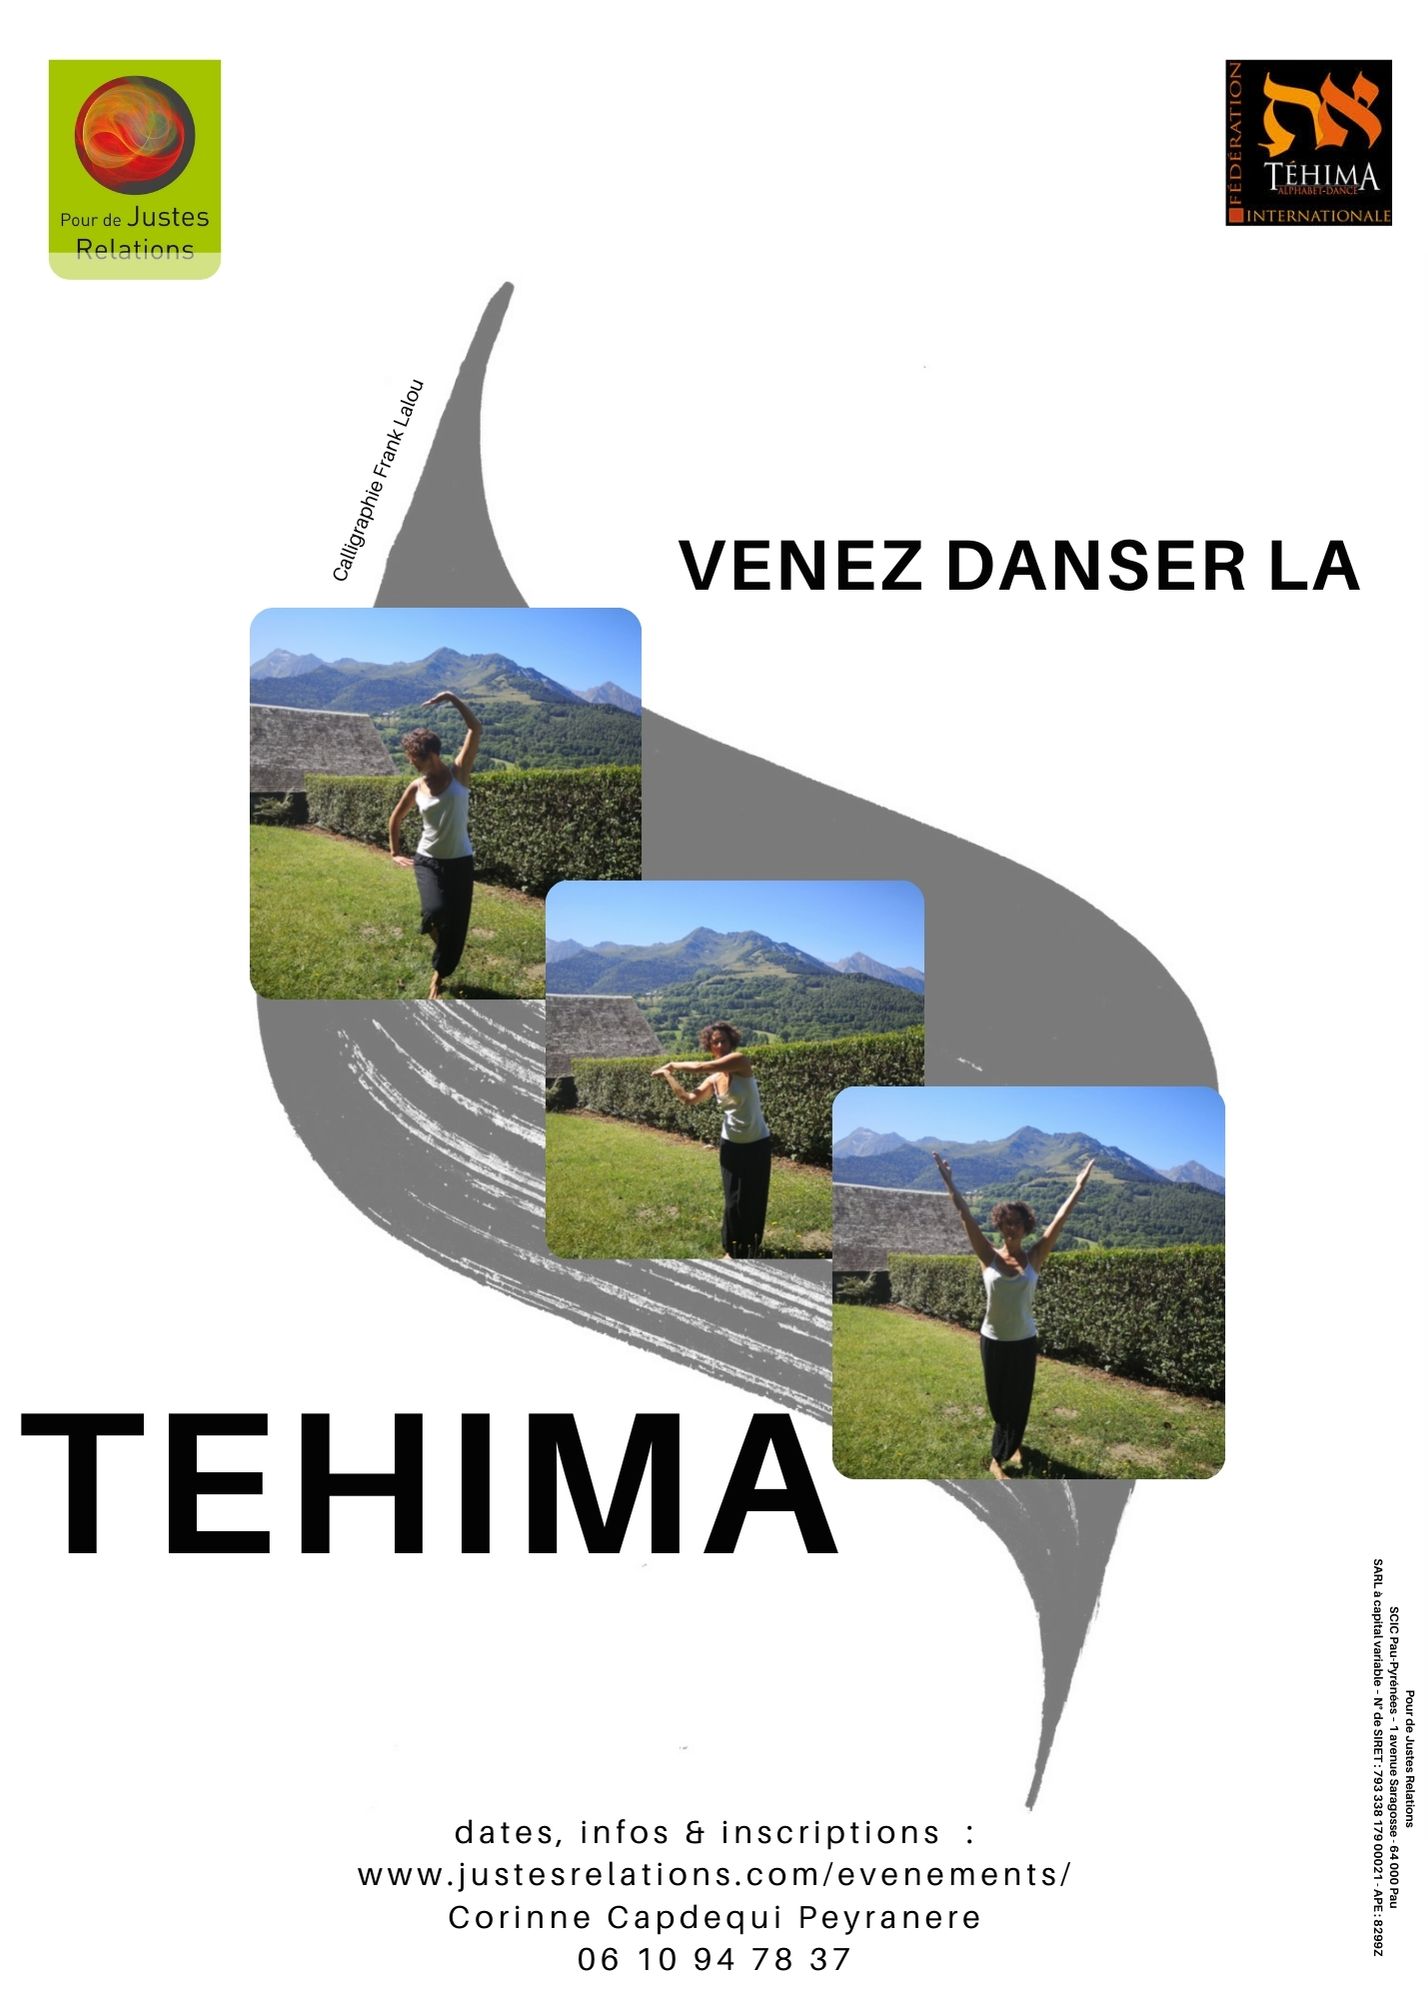 Tehima